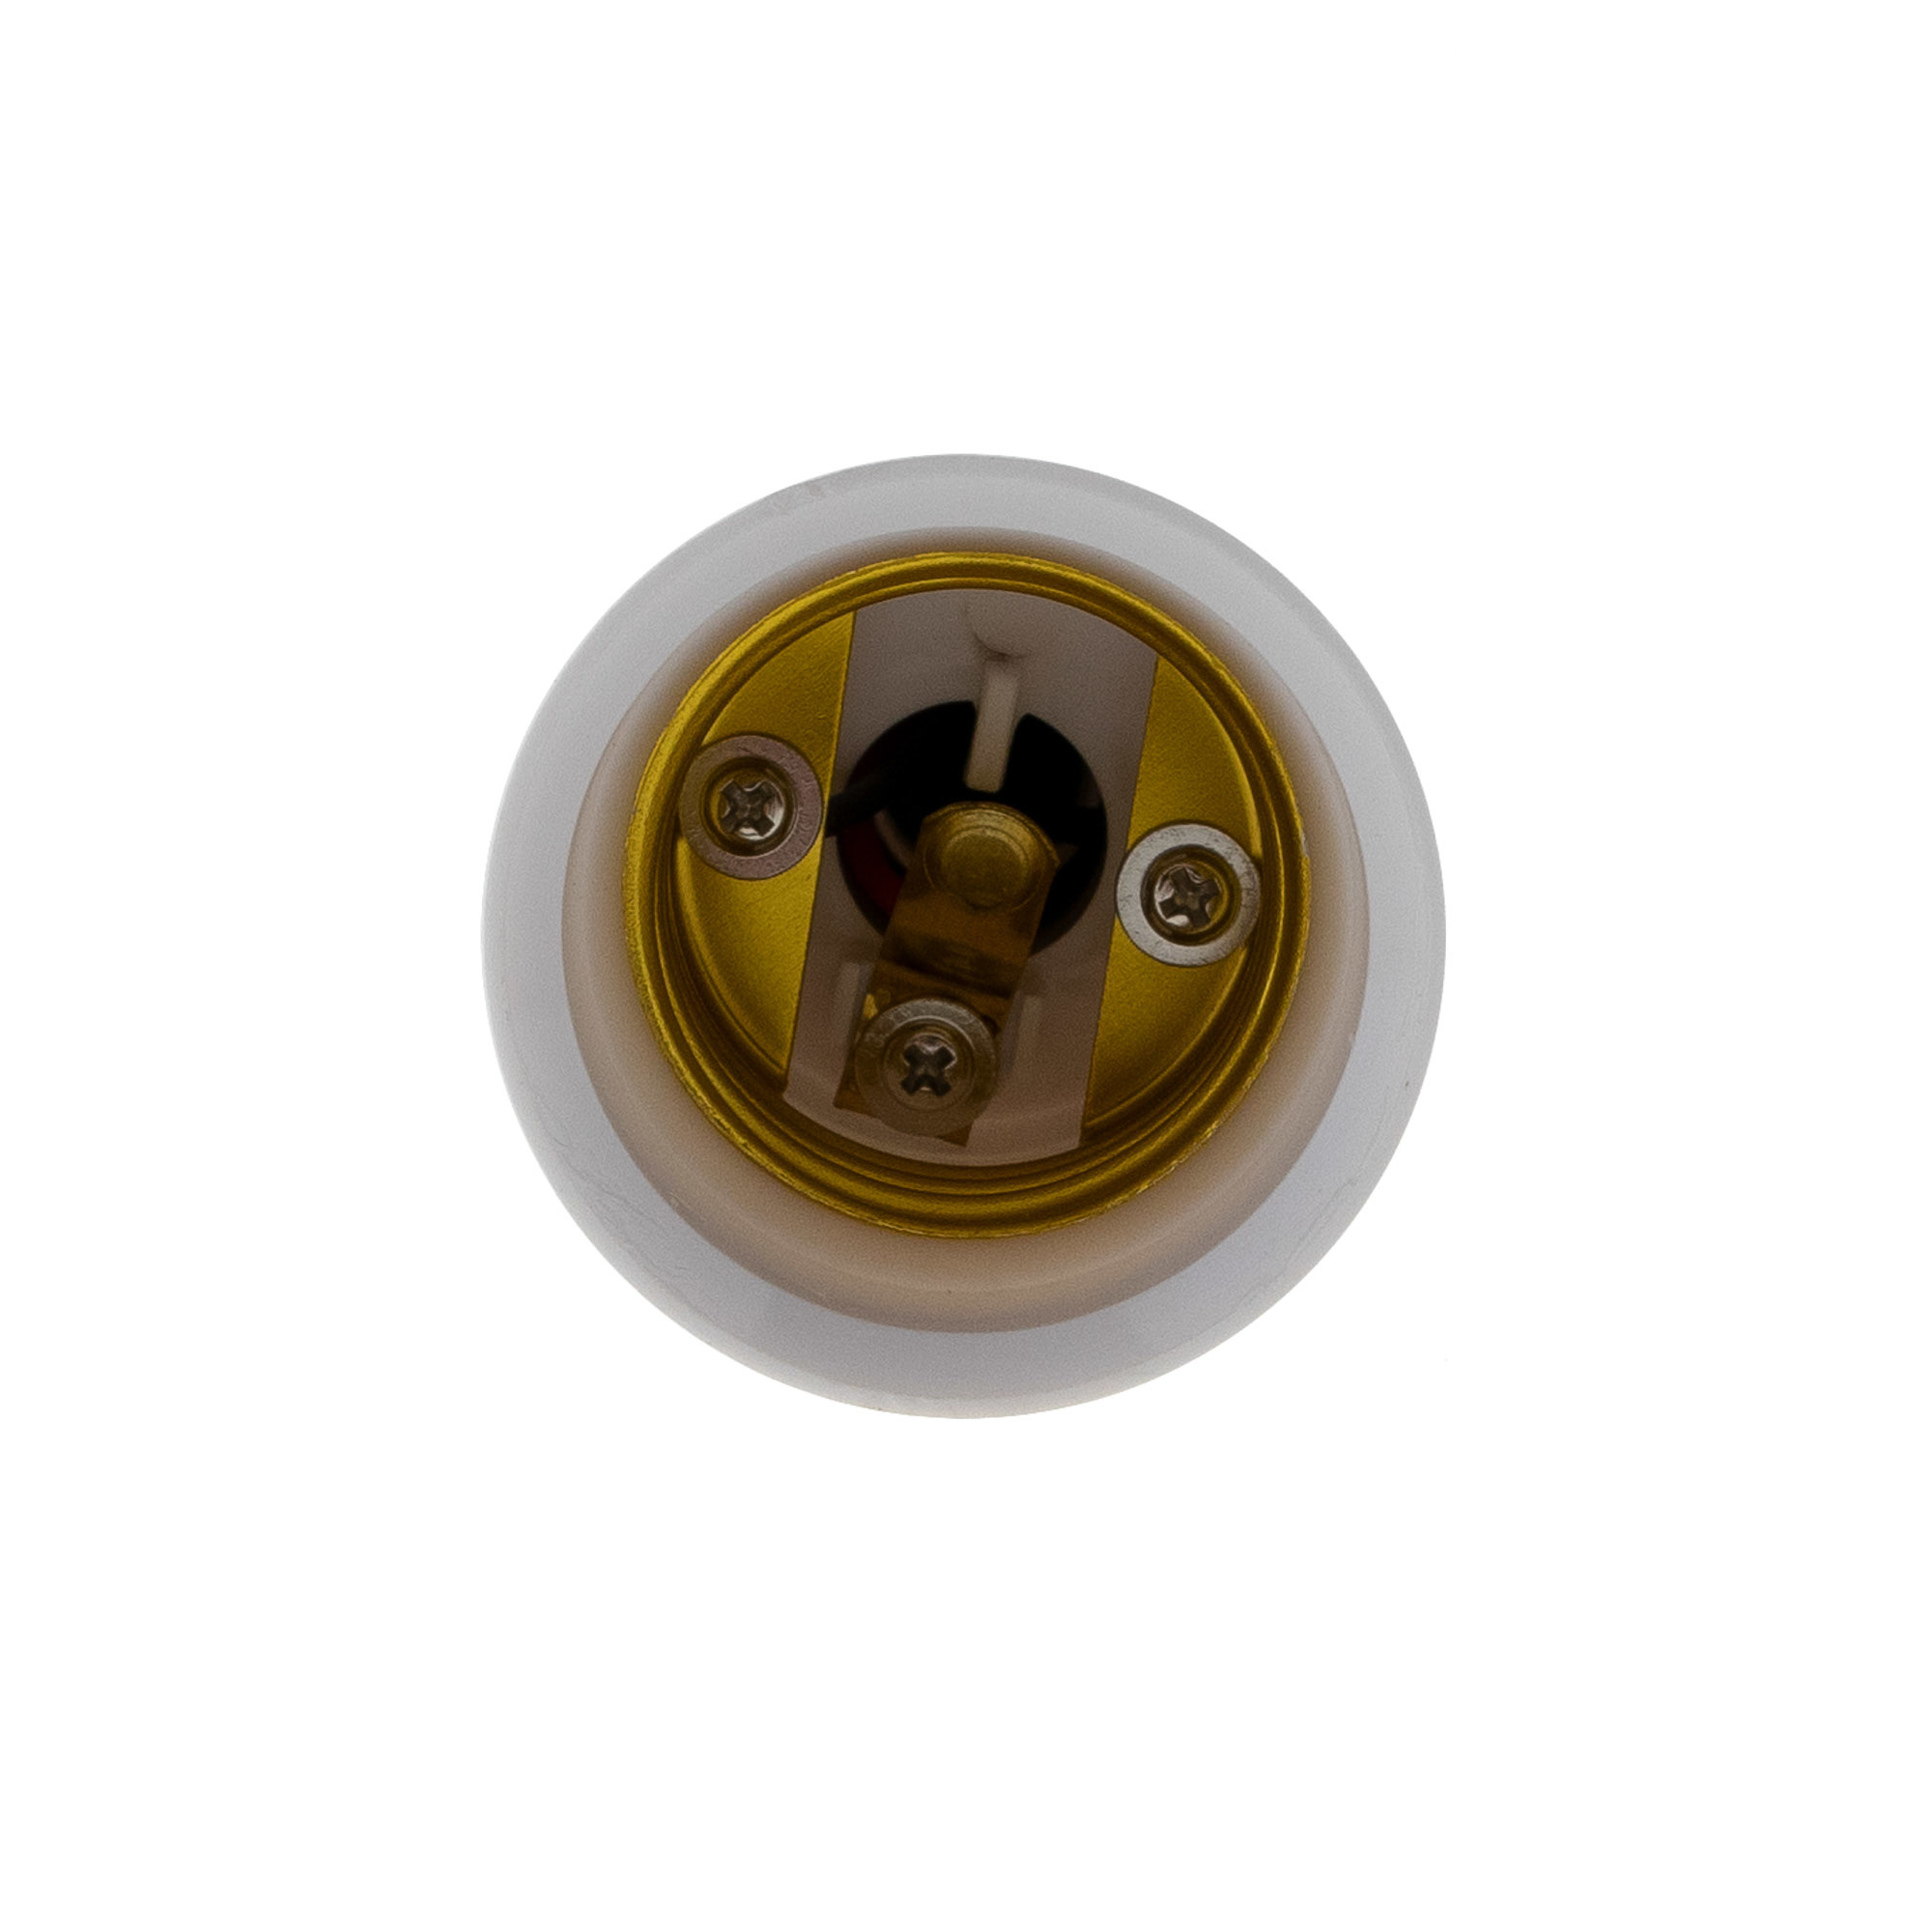 Lamp socket adaptor E14 to E27 - 4PCS